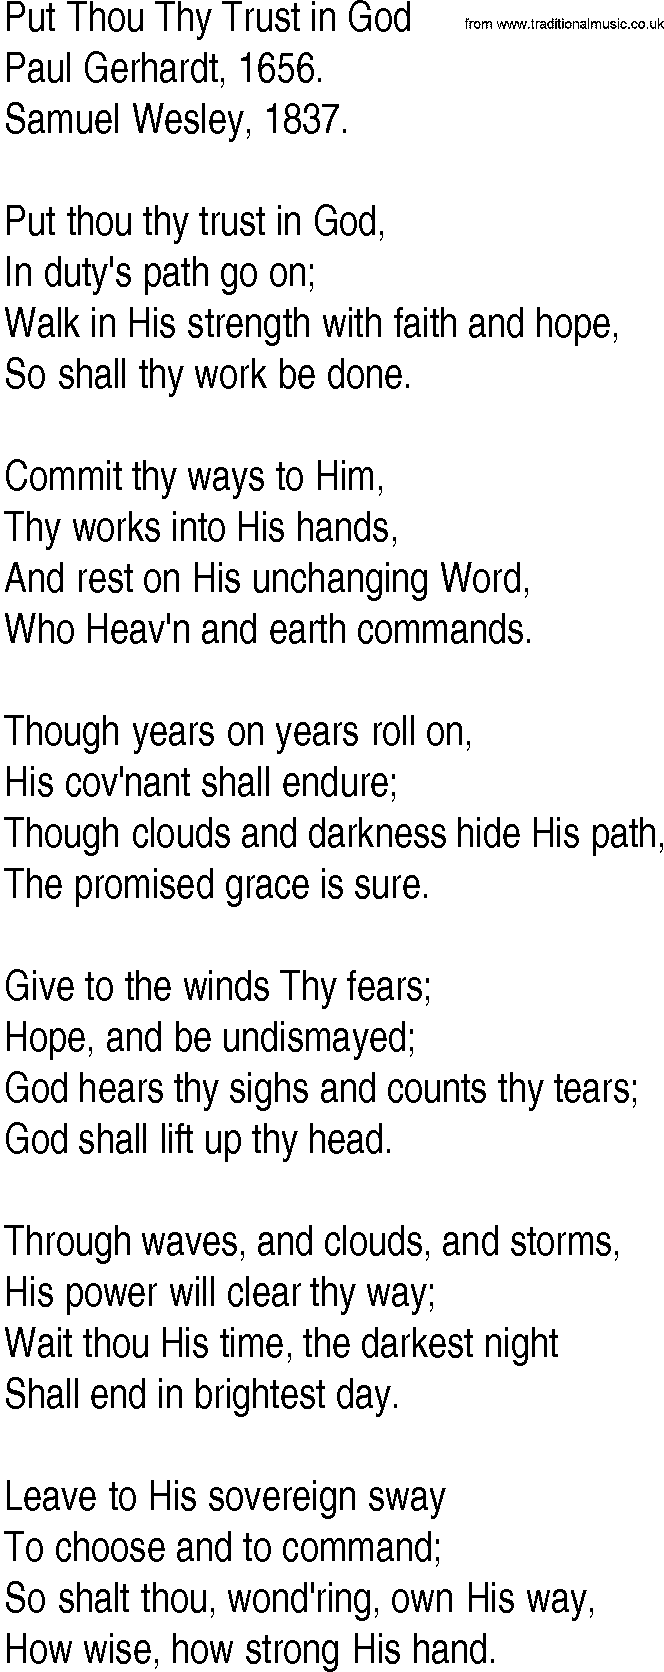 Hymn and Gospel Song: Put Thou Thy Trust in God by Paul Gerhardt lyrics